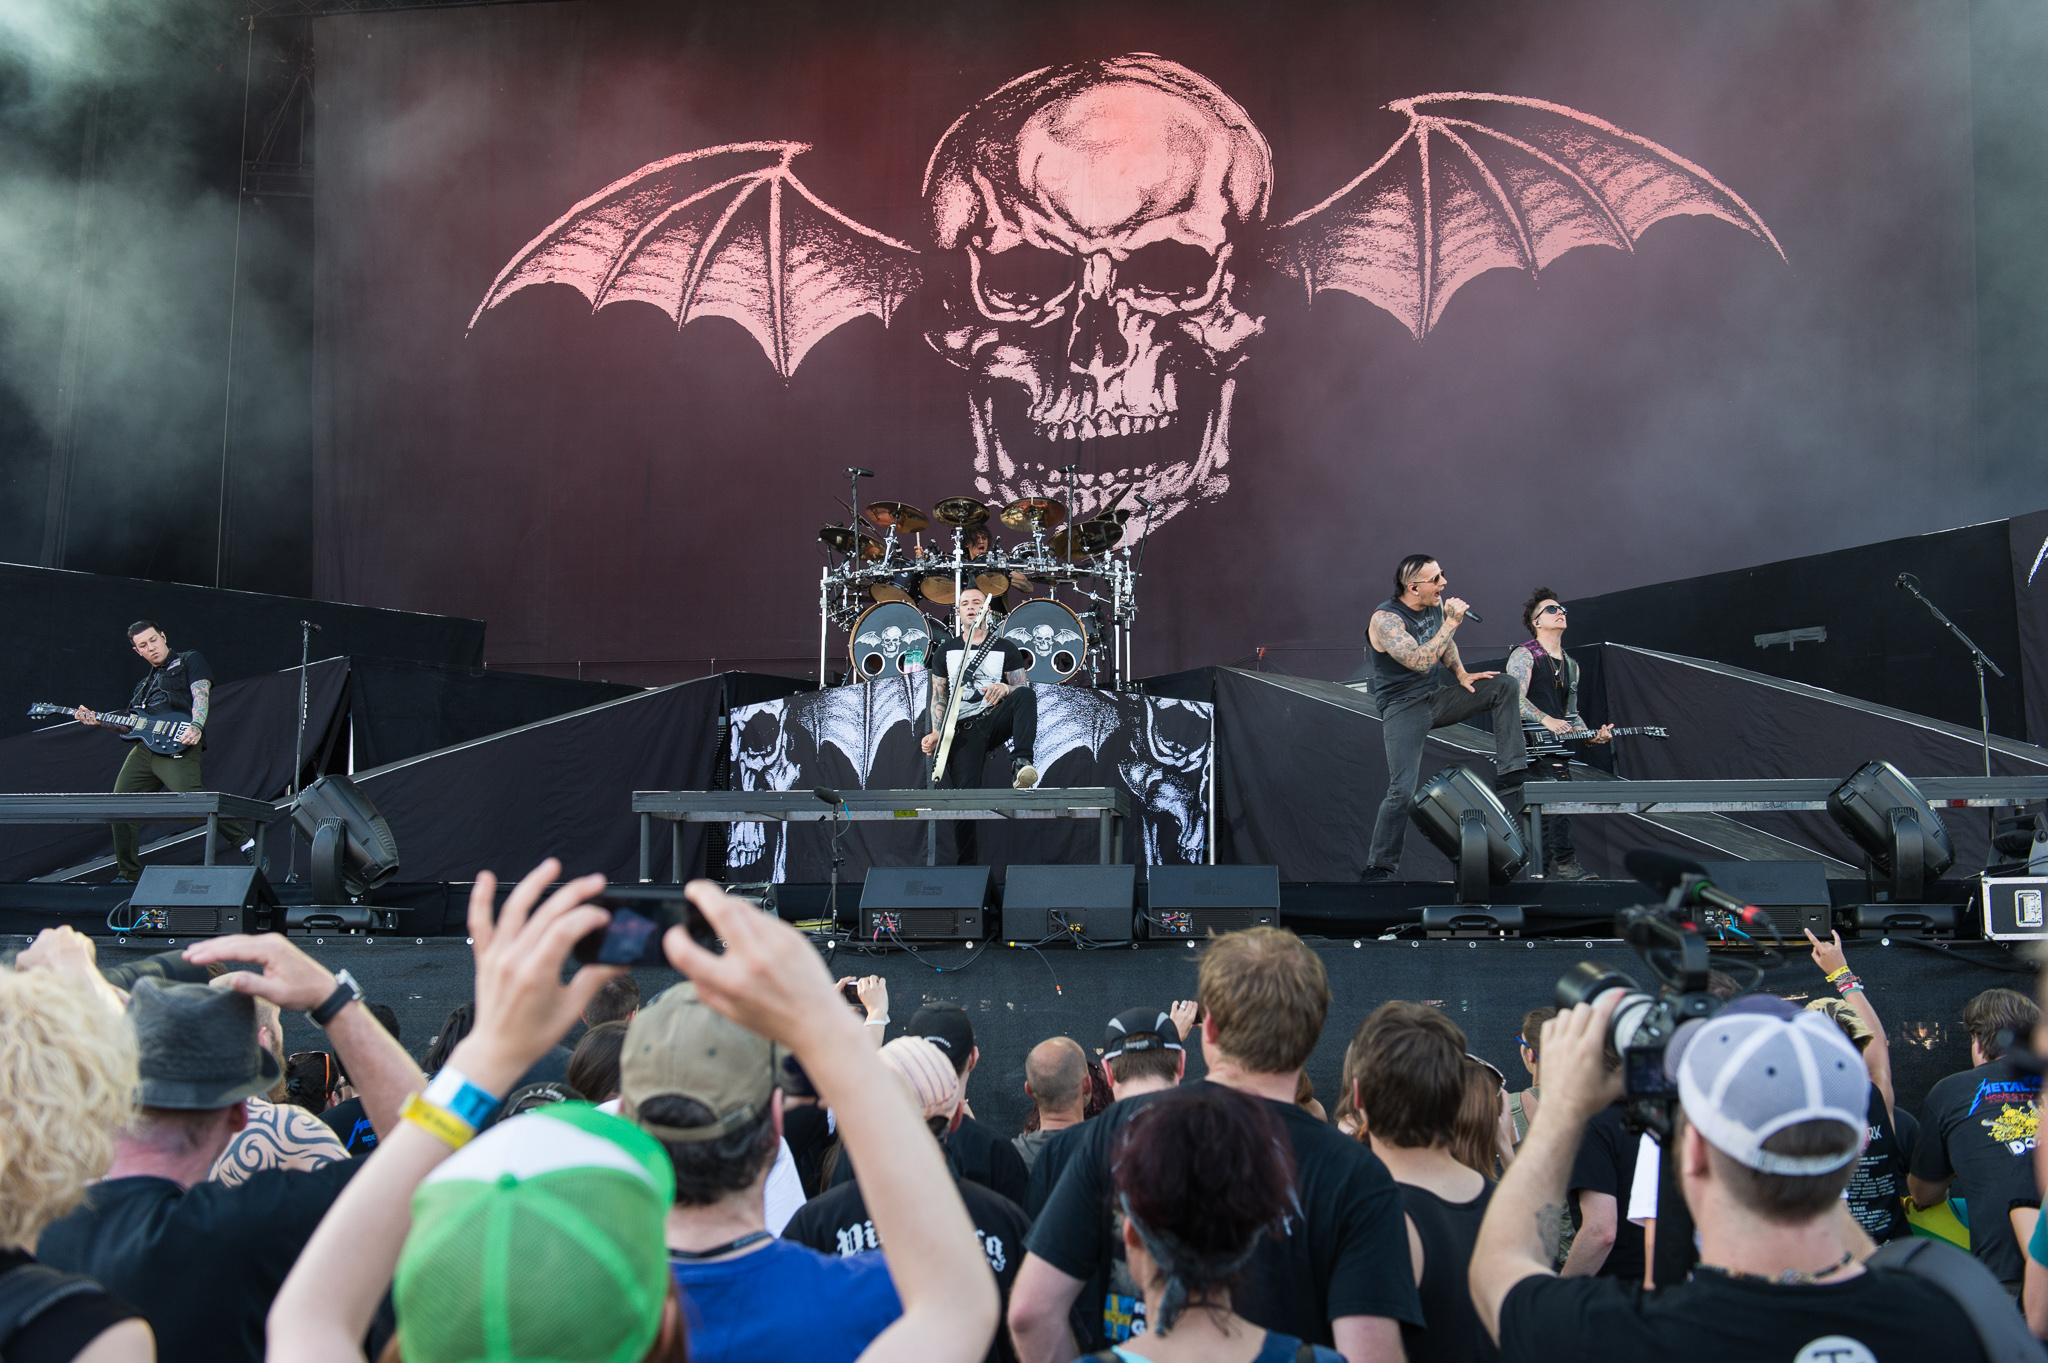 Avenged Sevenfold discography - Wikipedia